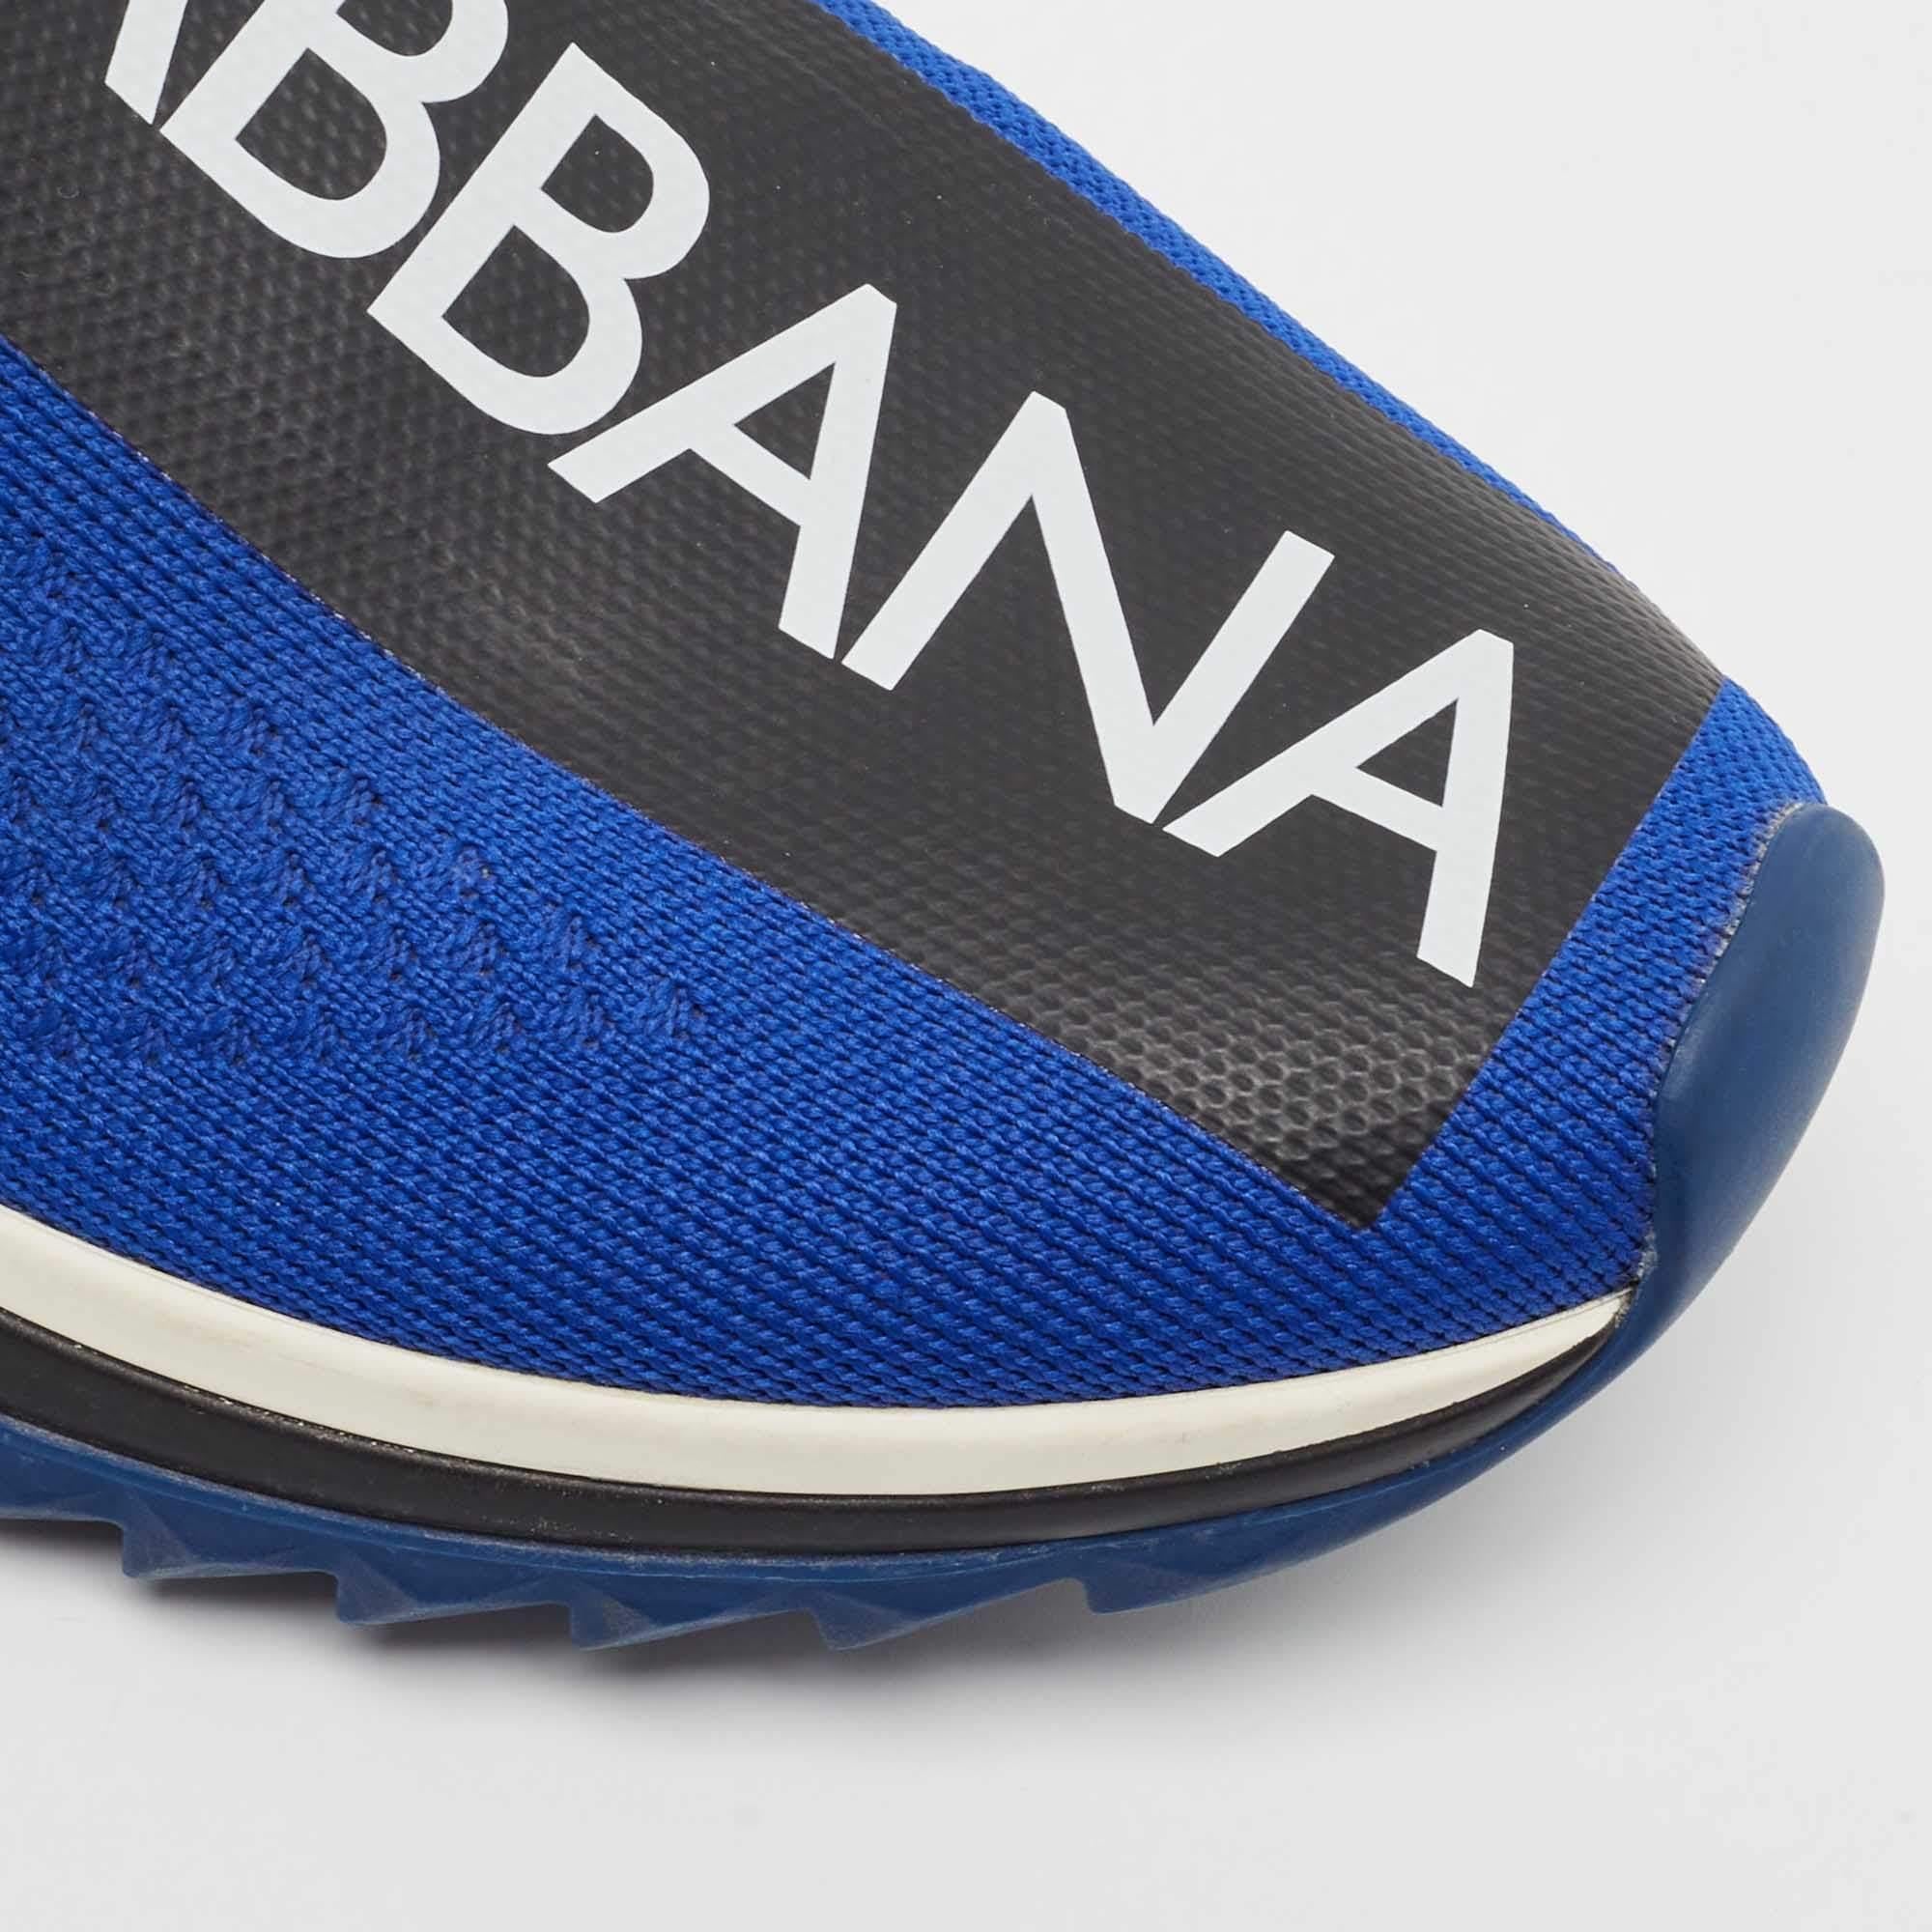 Dolce & Gabbana Blue/Black Knit Fabric Sorrento Sneakers Size 39 11